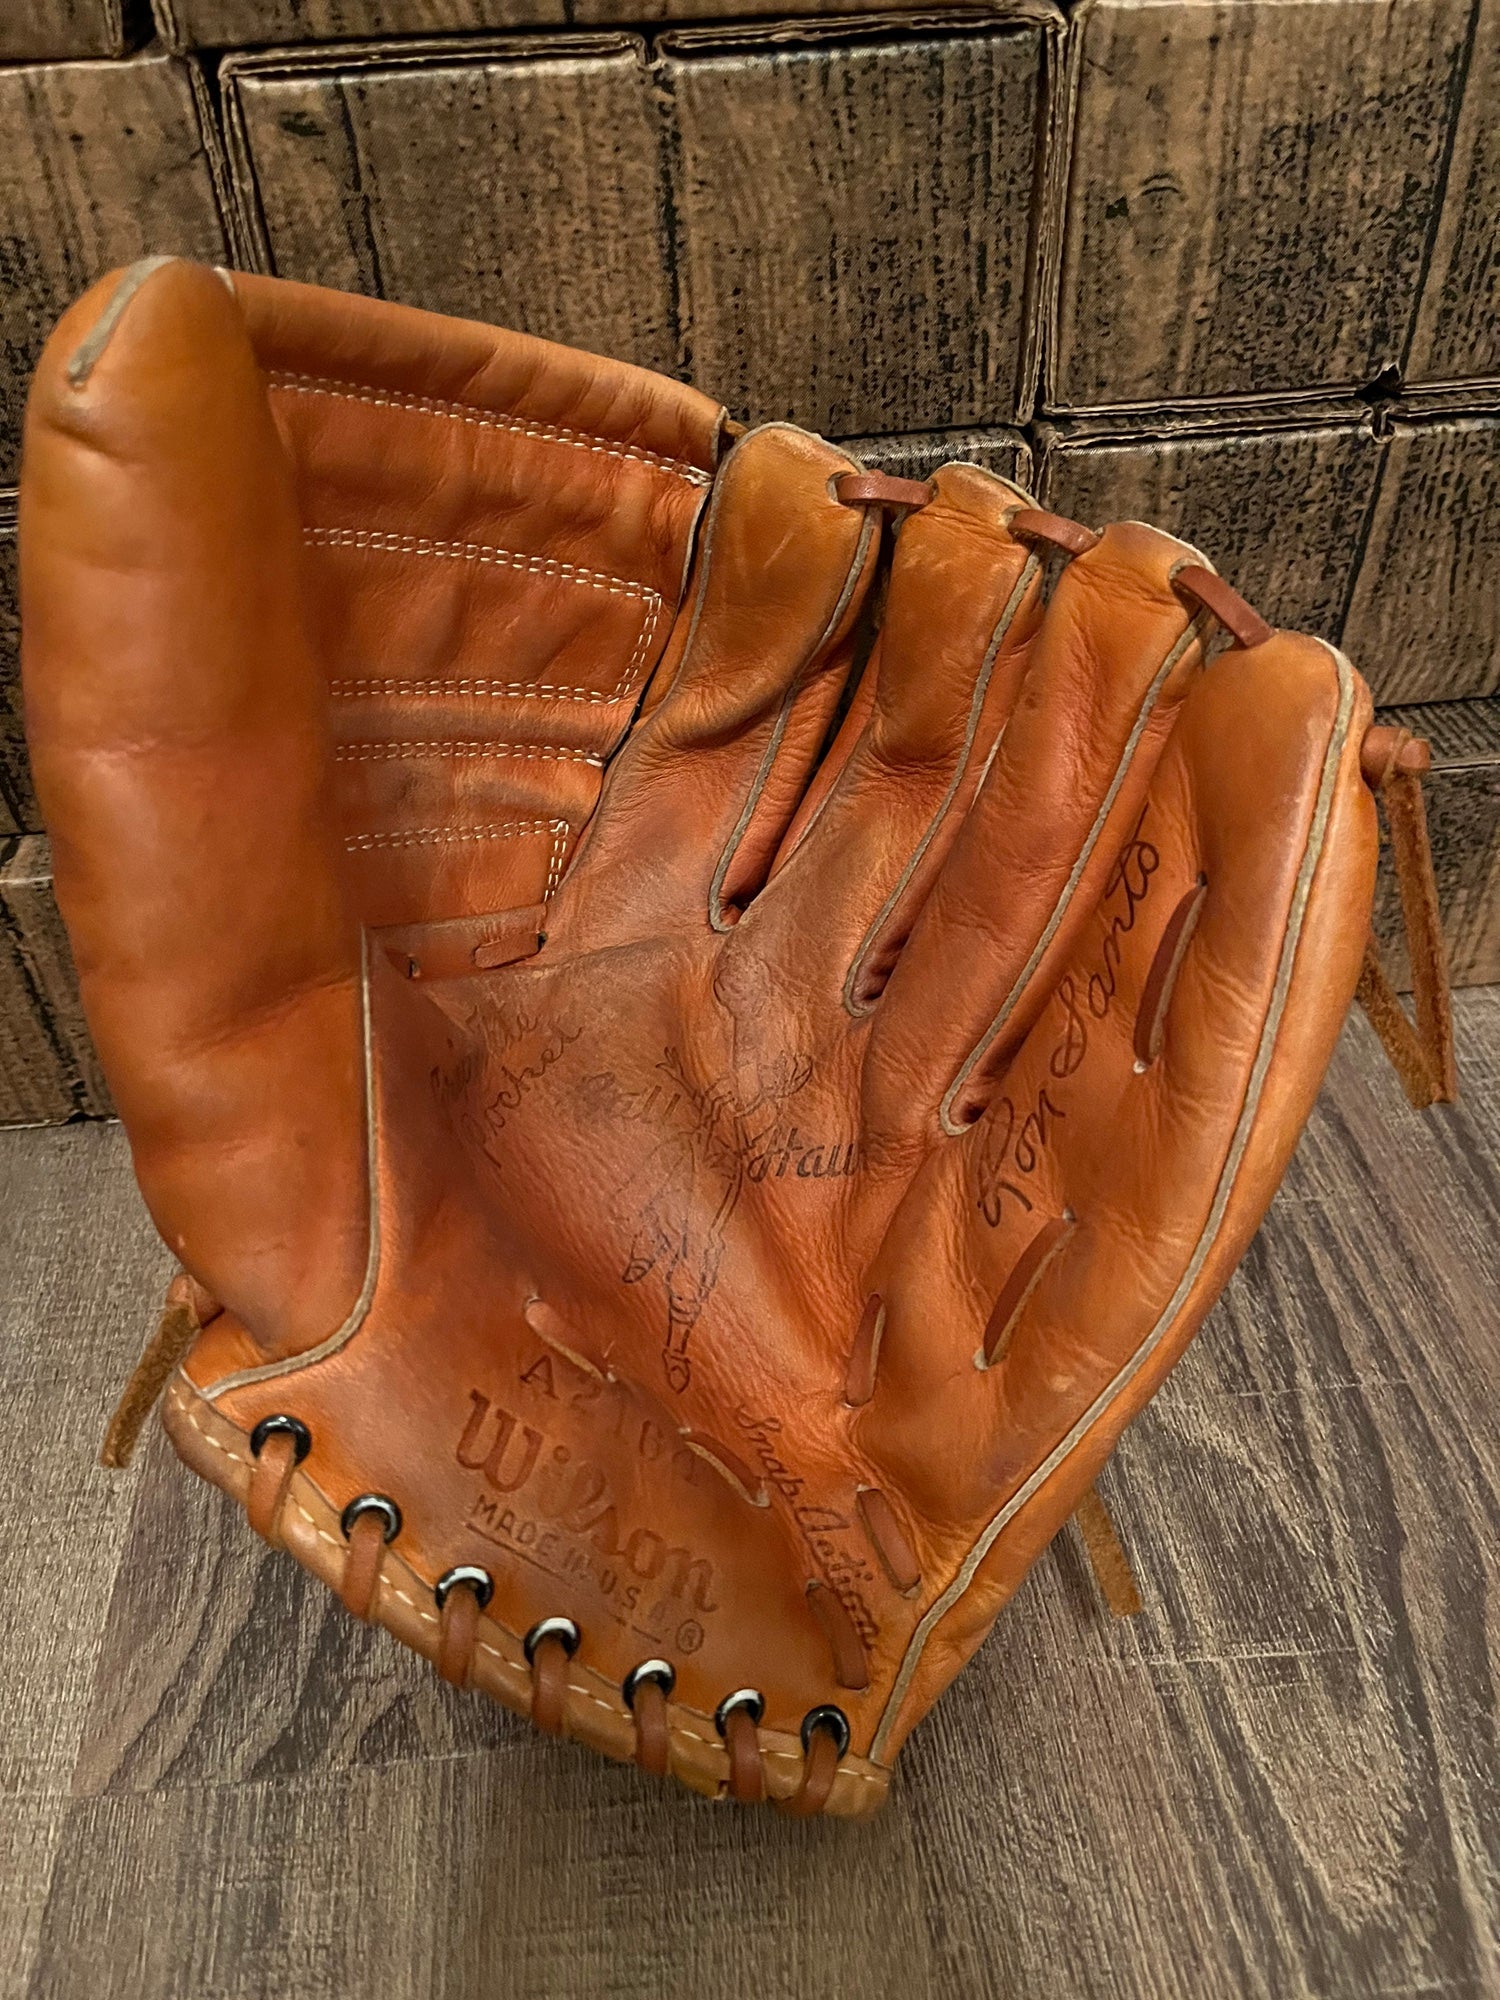 Wilson Right Hand Throw A2164 Jim Catfish Hunter Autograph Model Baseball  Glove 11